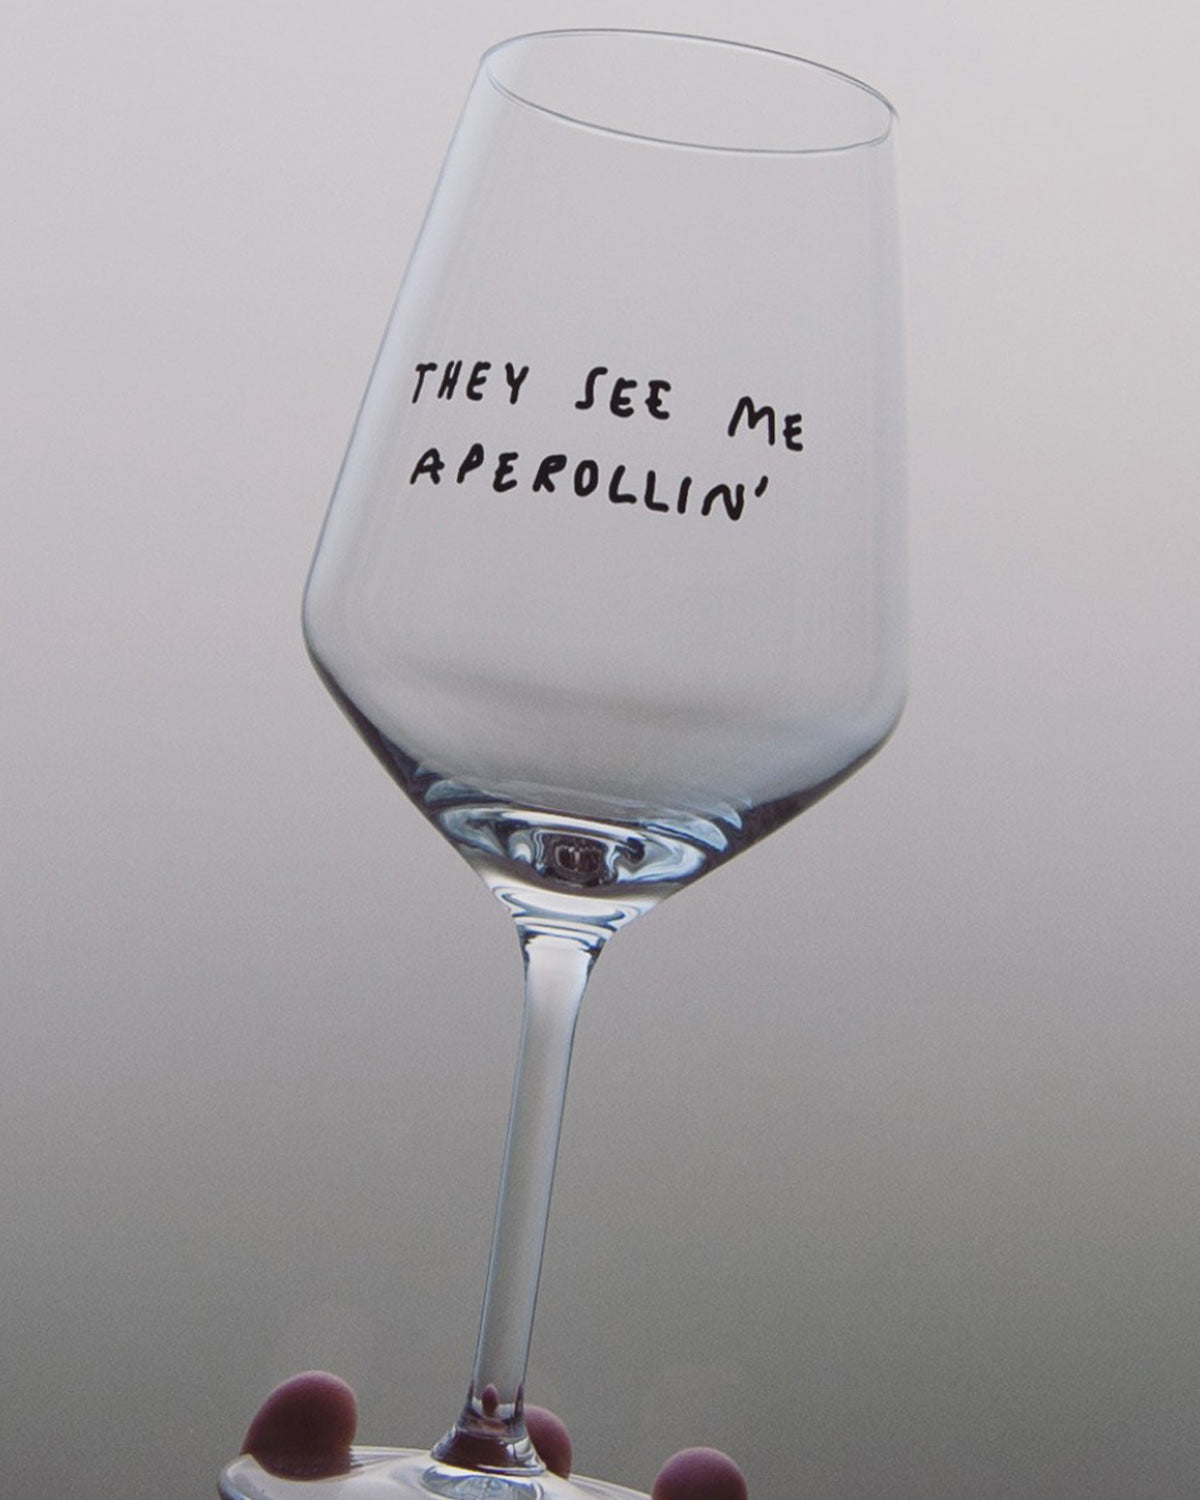 "They See Me Aperollin'" Glas by Johanna Schwarzer